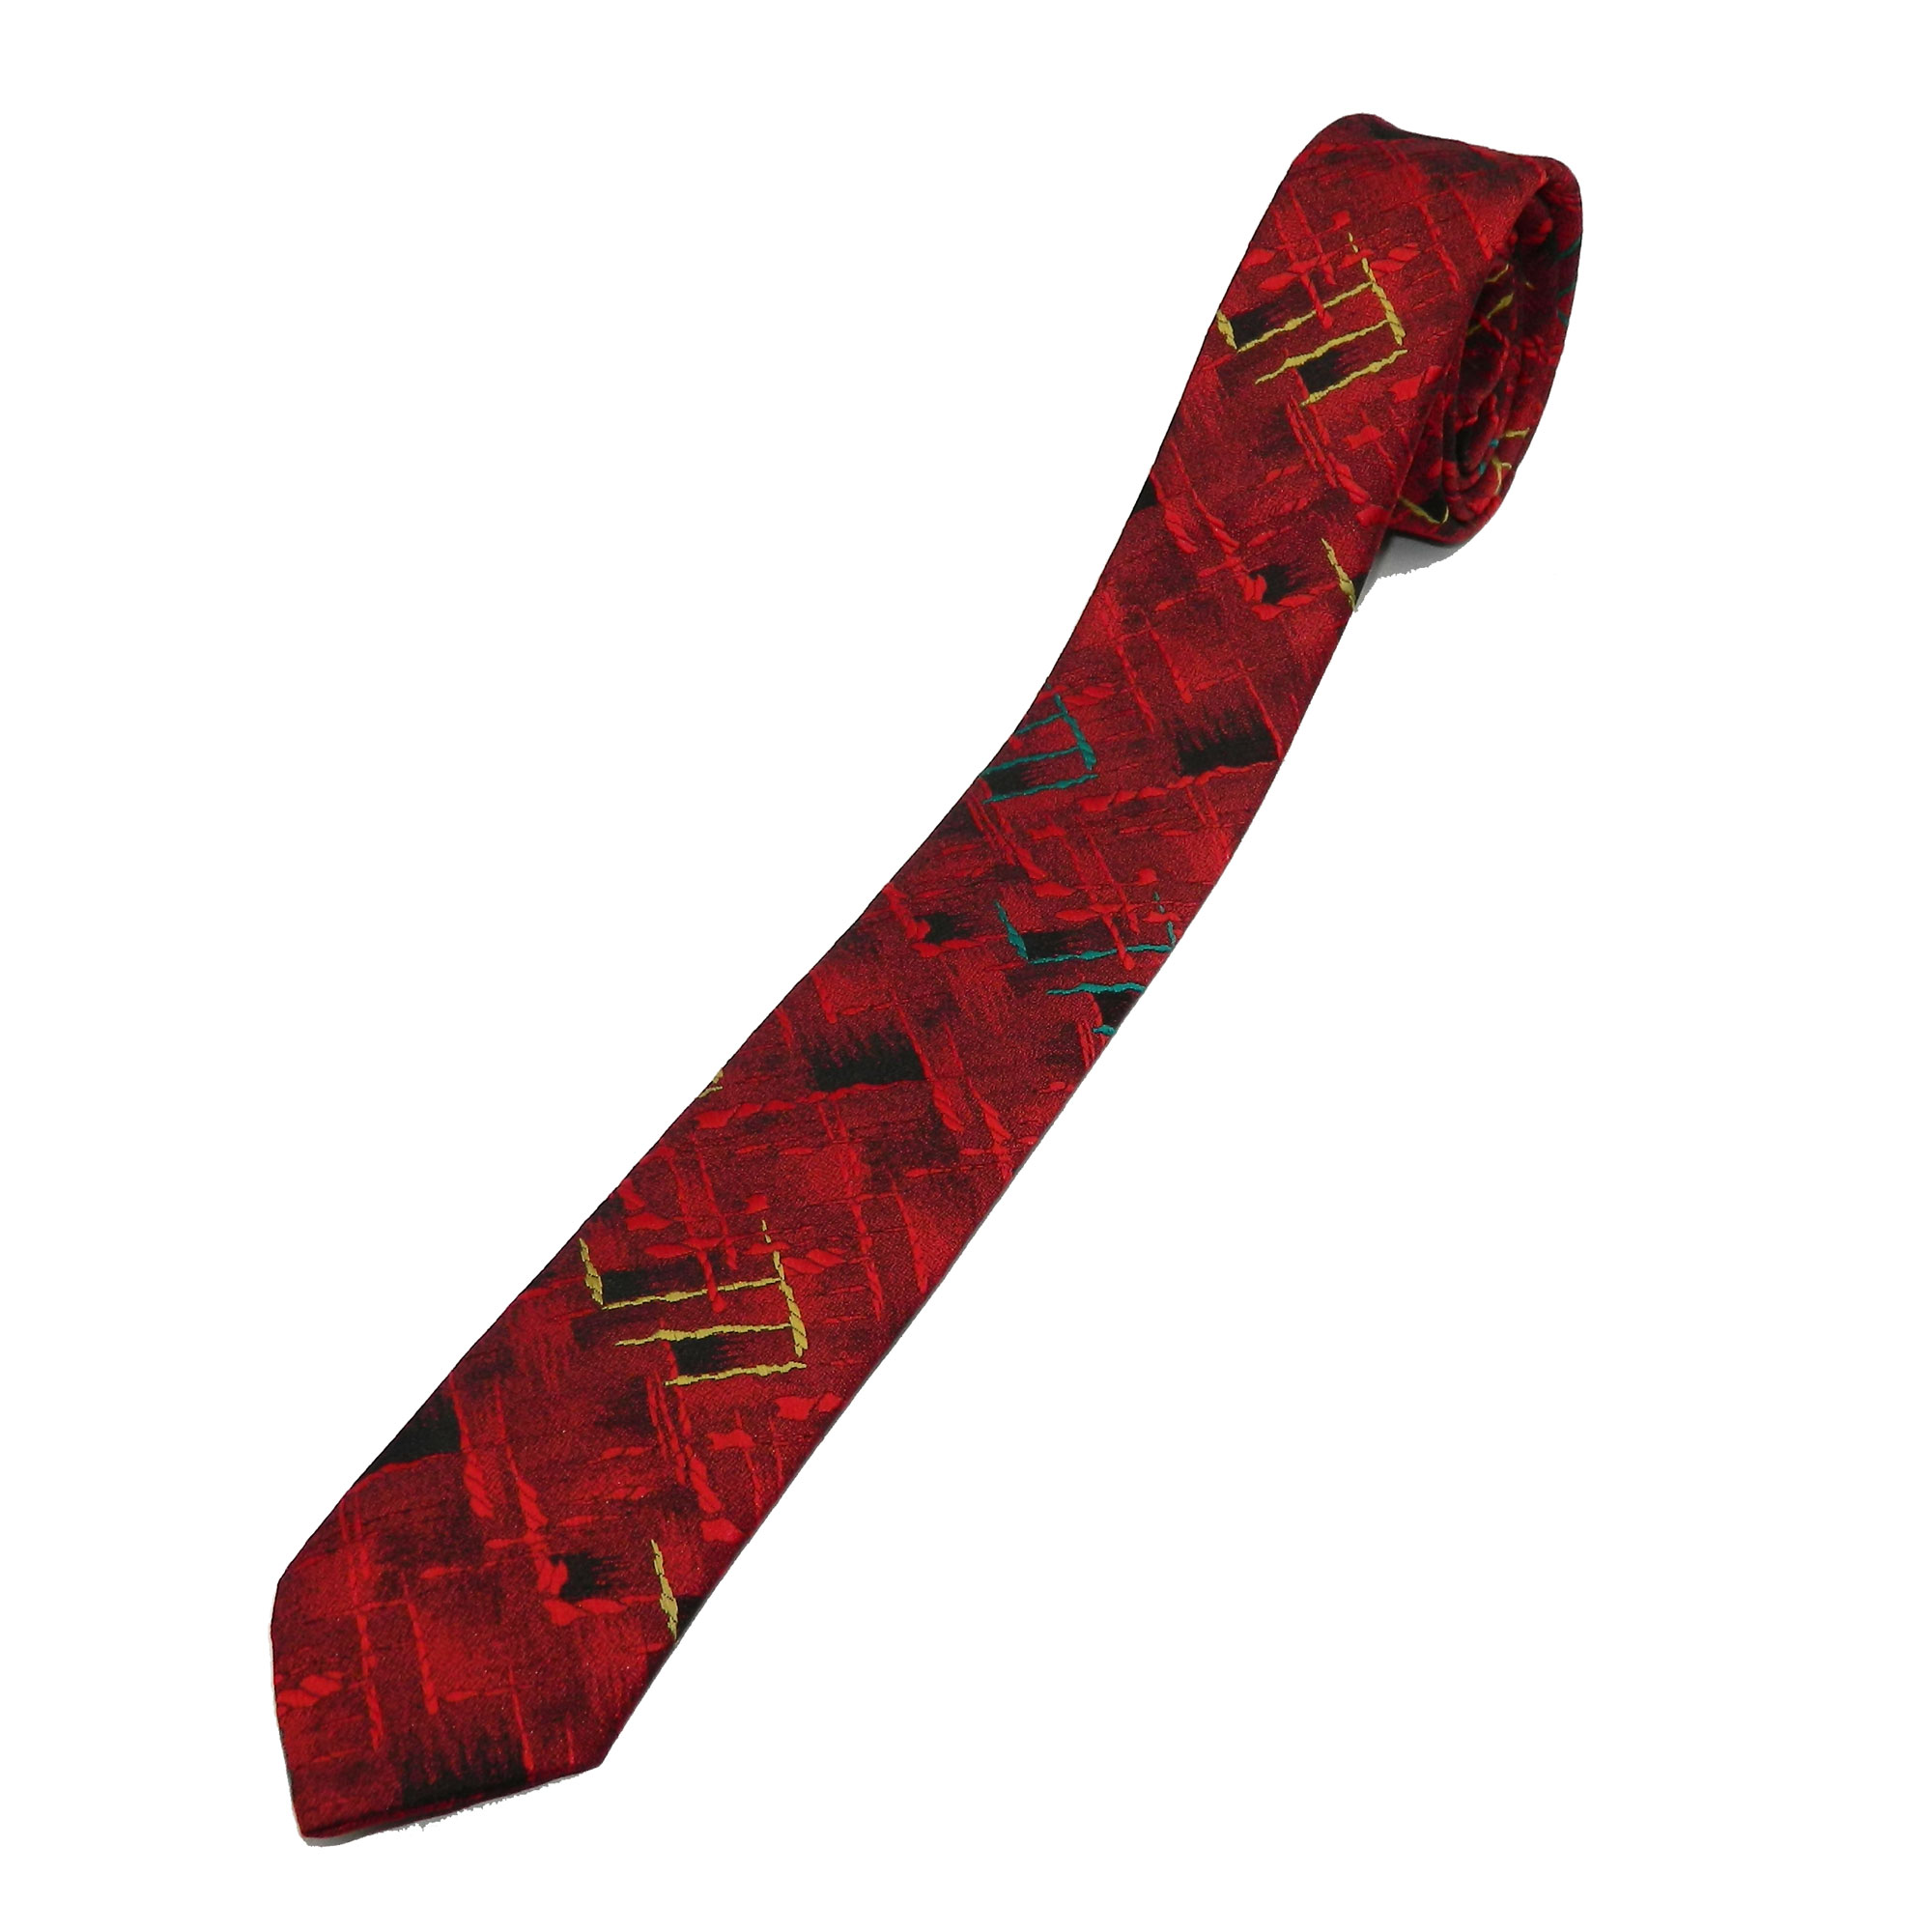 1980s skinny red tie